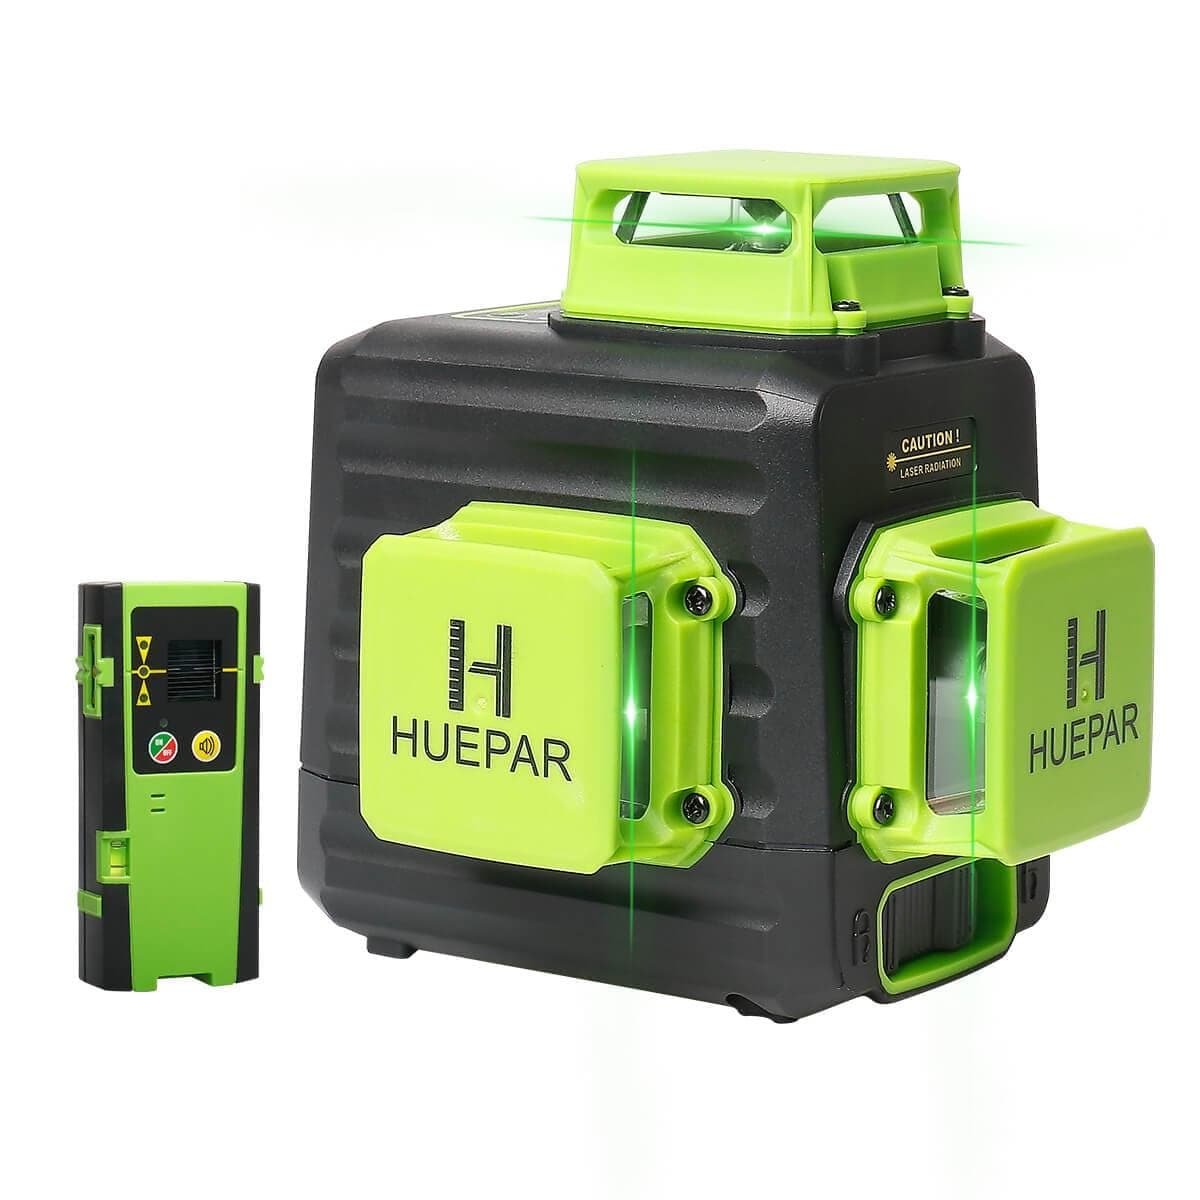 Huepar B03CG Pro - 3 x 360° Green Beam Cross Line Self-leveling Laser Level with Hard Carry Case - HUEPAR US